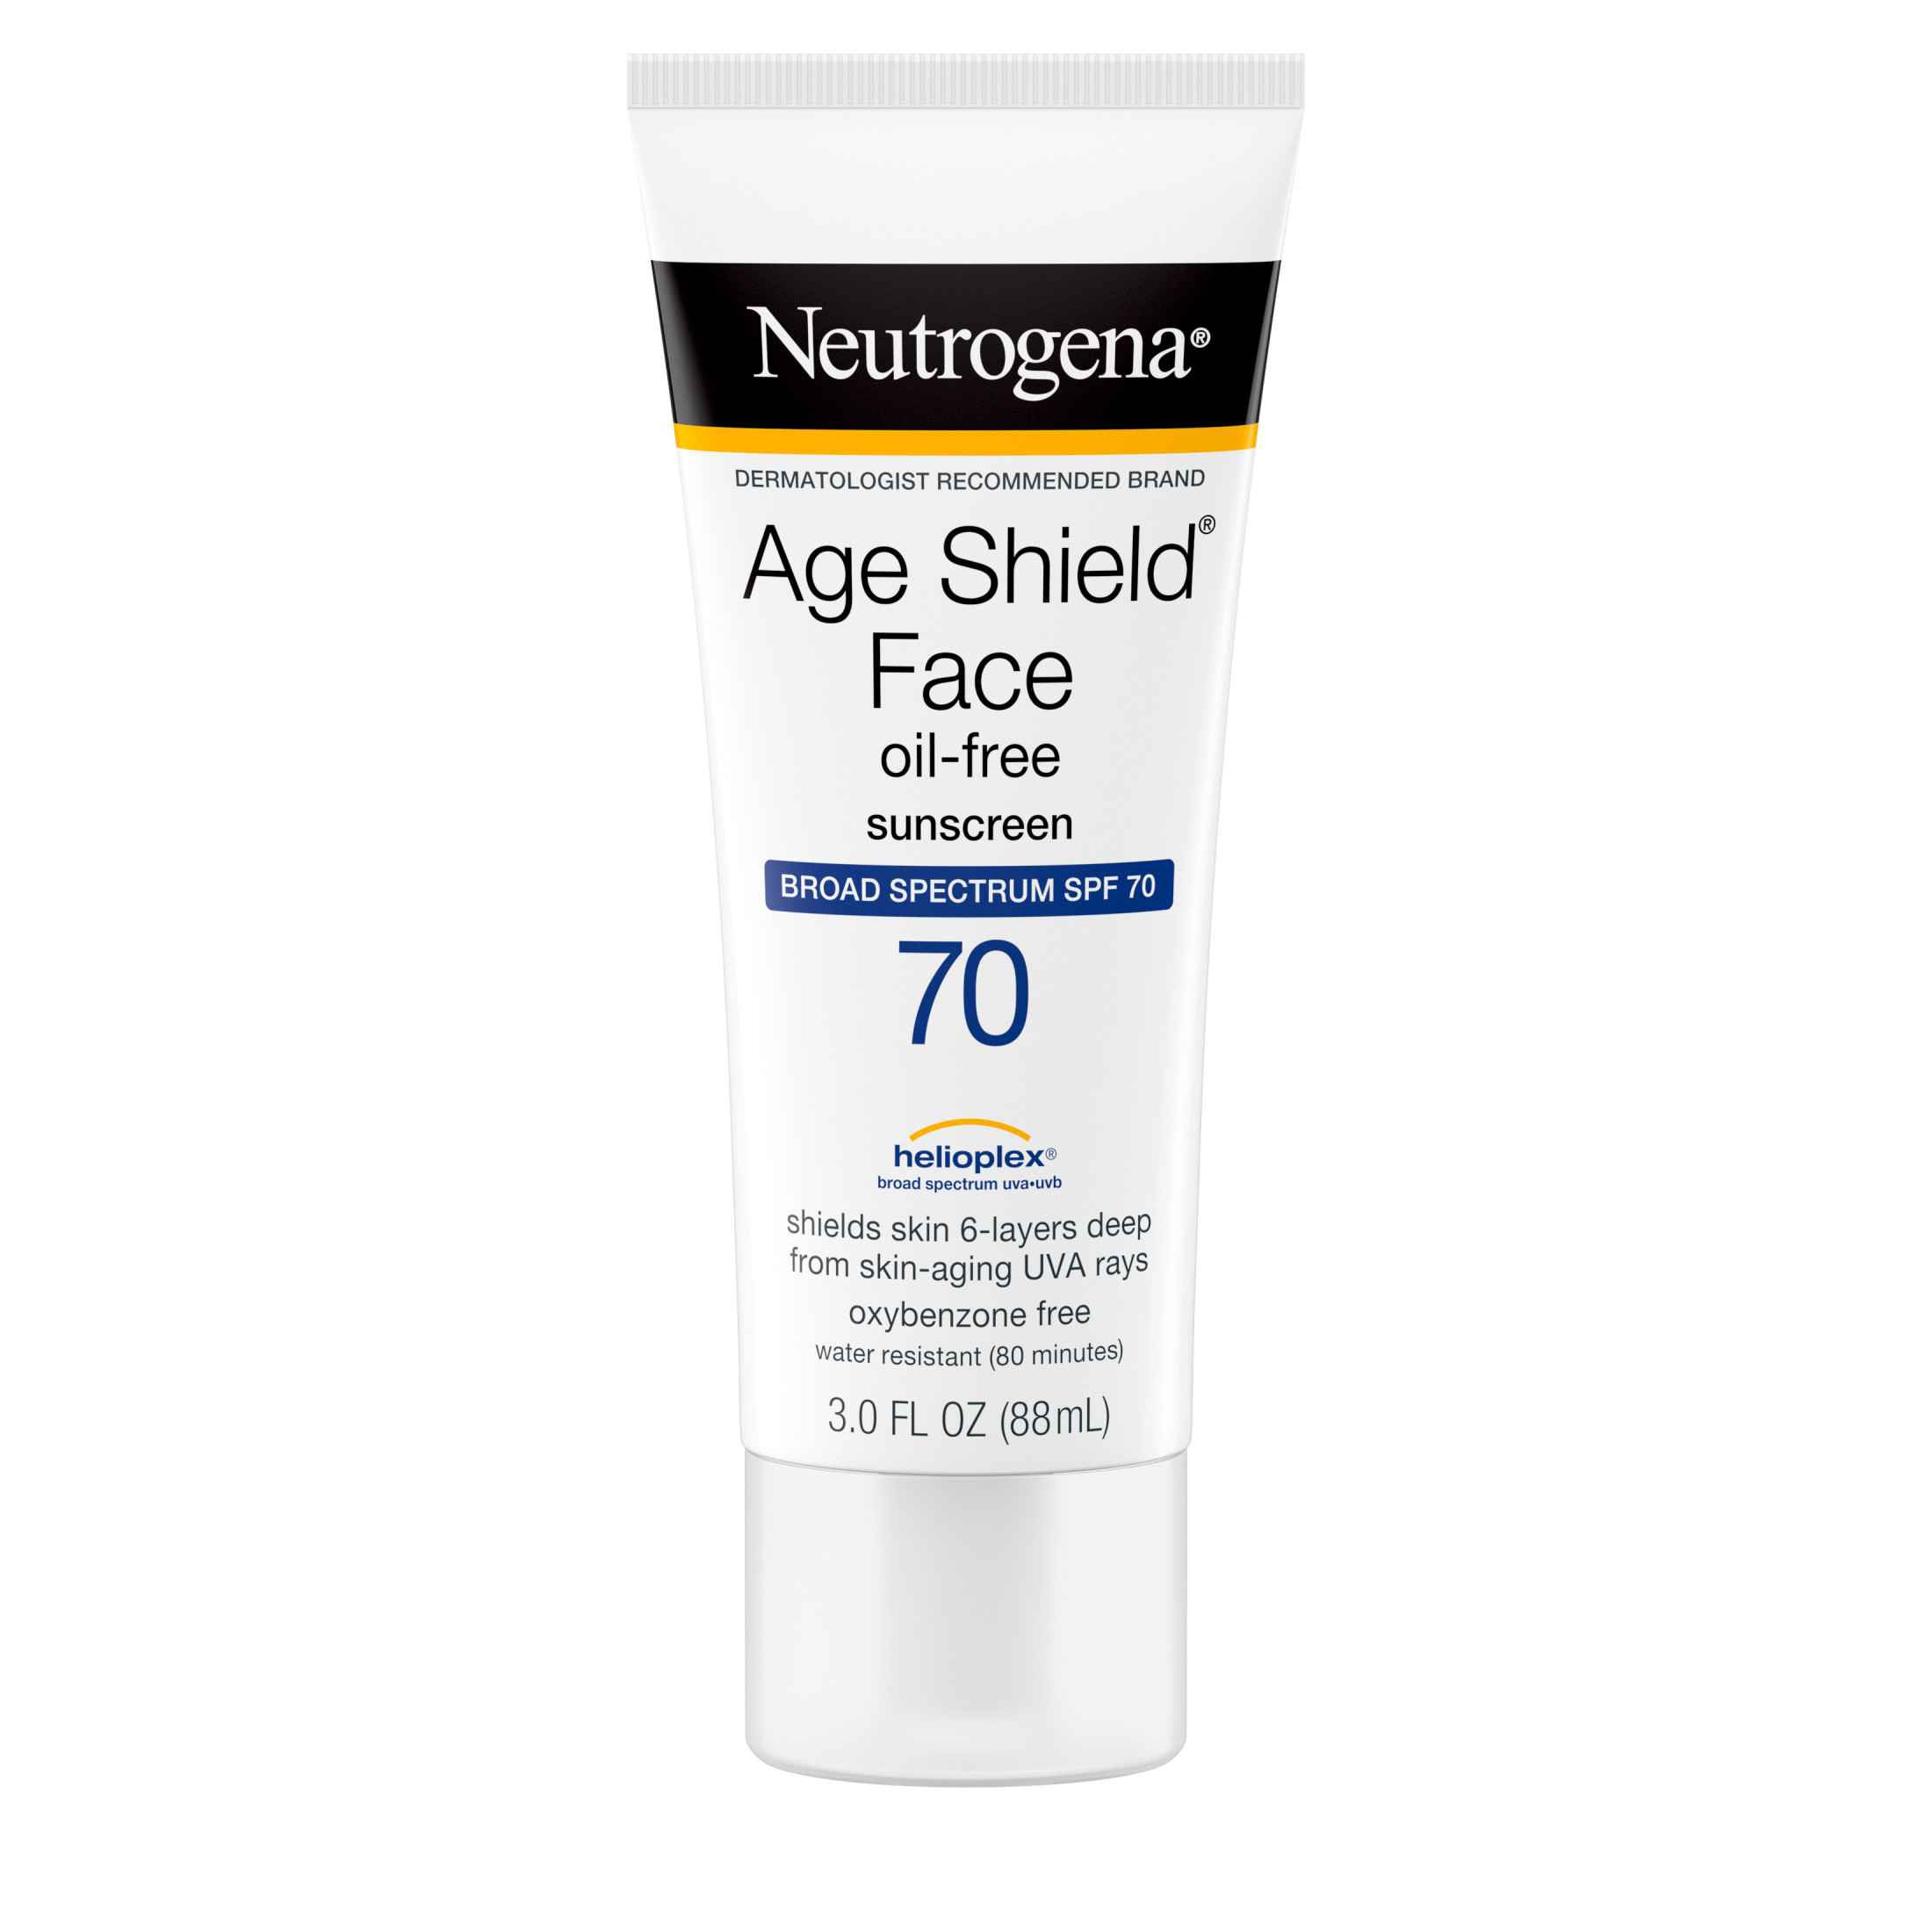 Neutrogena Age Shield Face Oil-Free Sunscreen, SPF 70 Sunblock, 3 fl oz - image 1 of 8